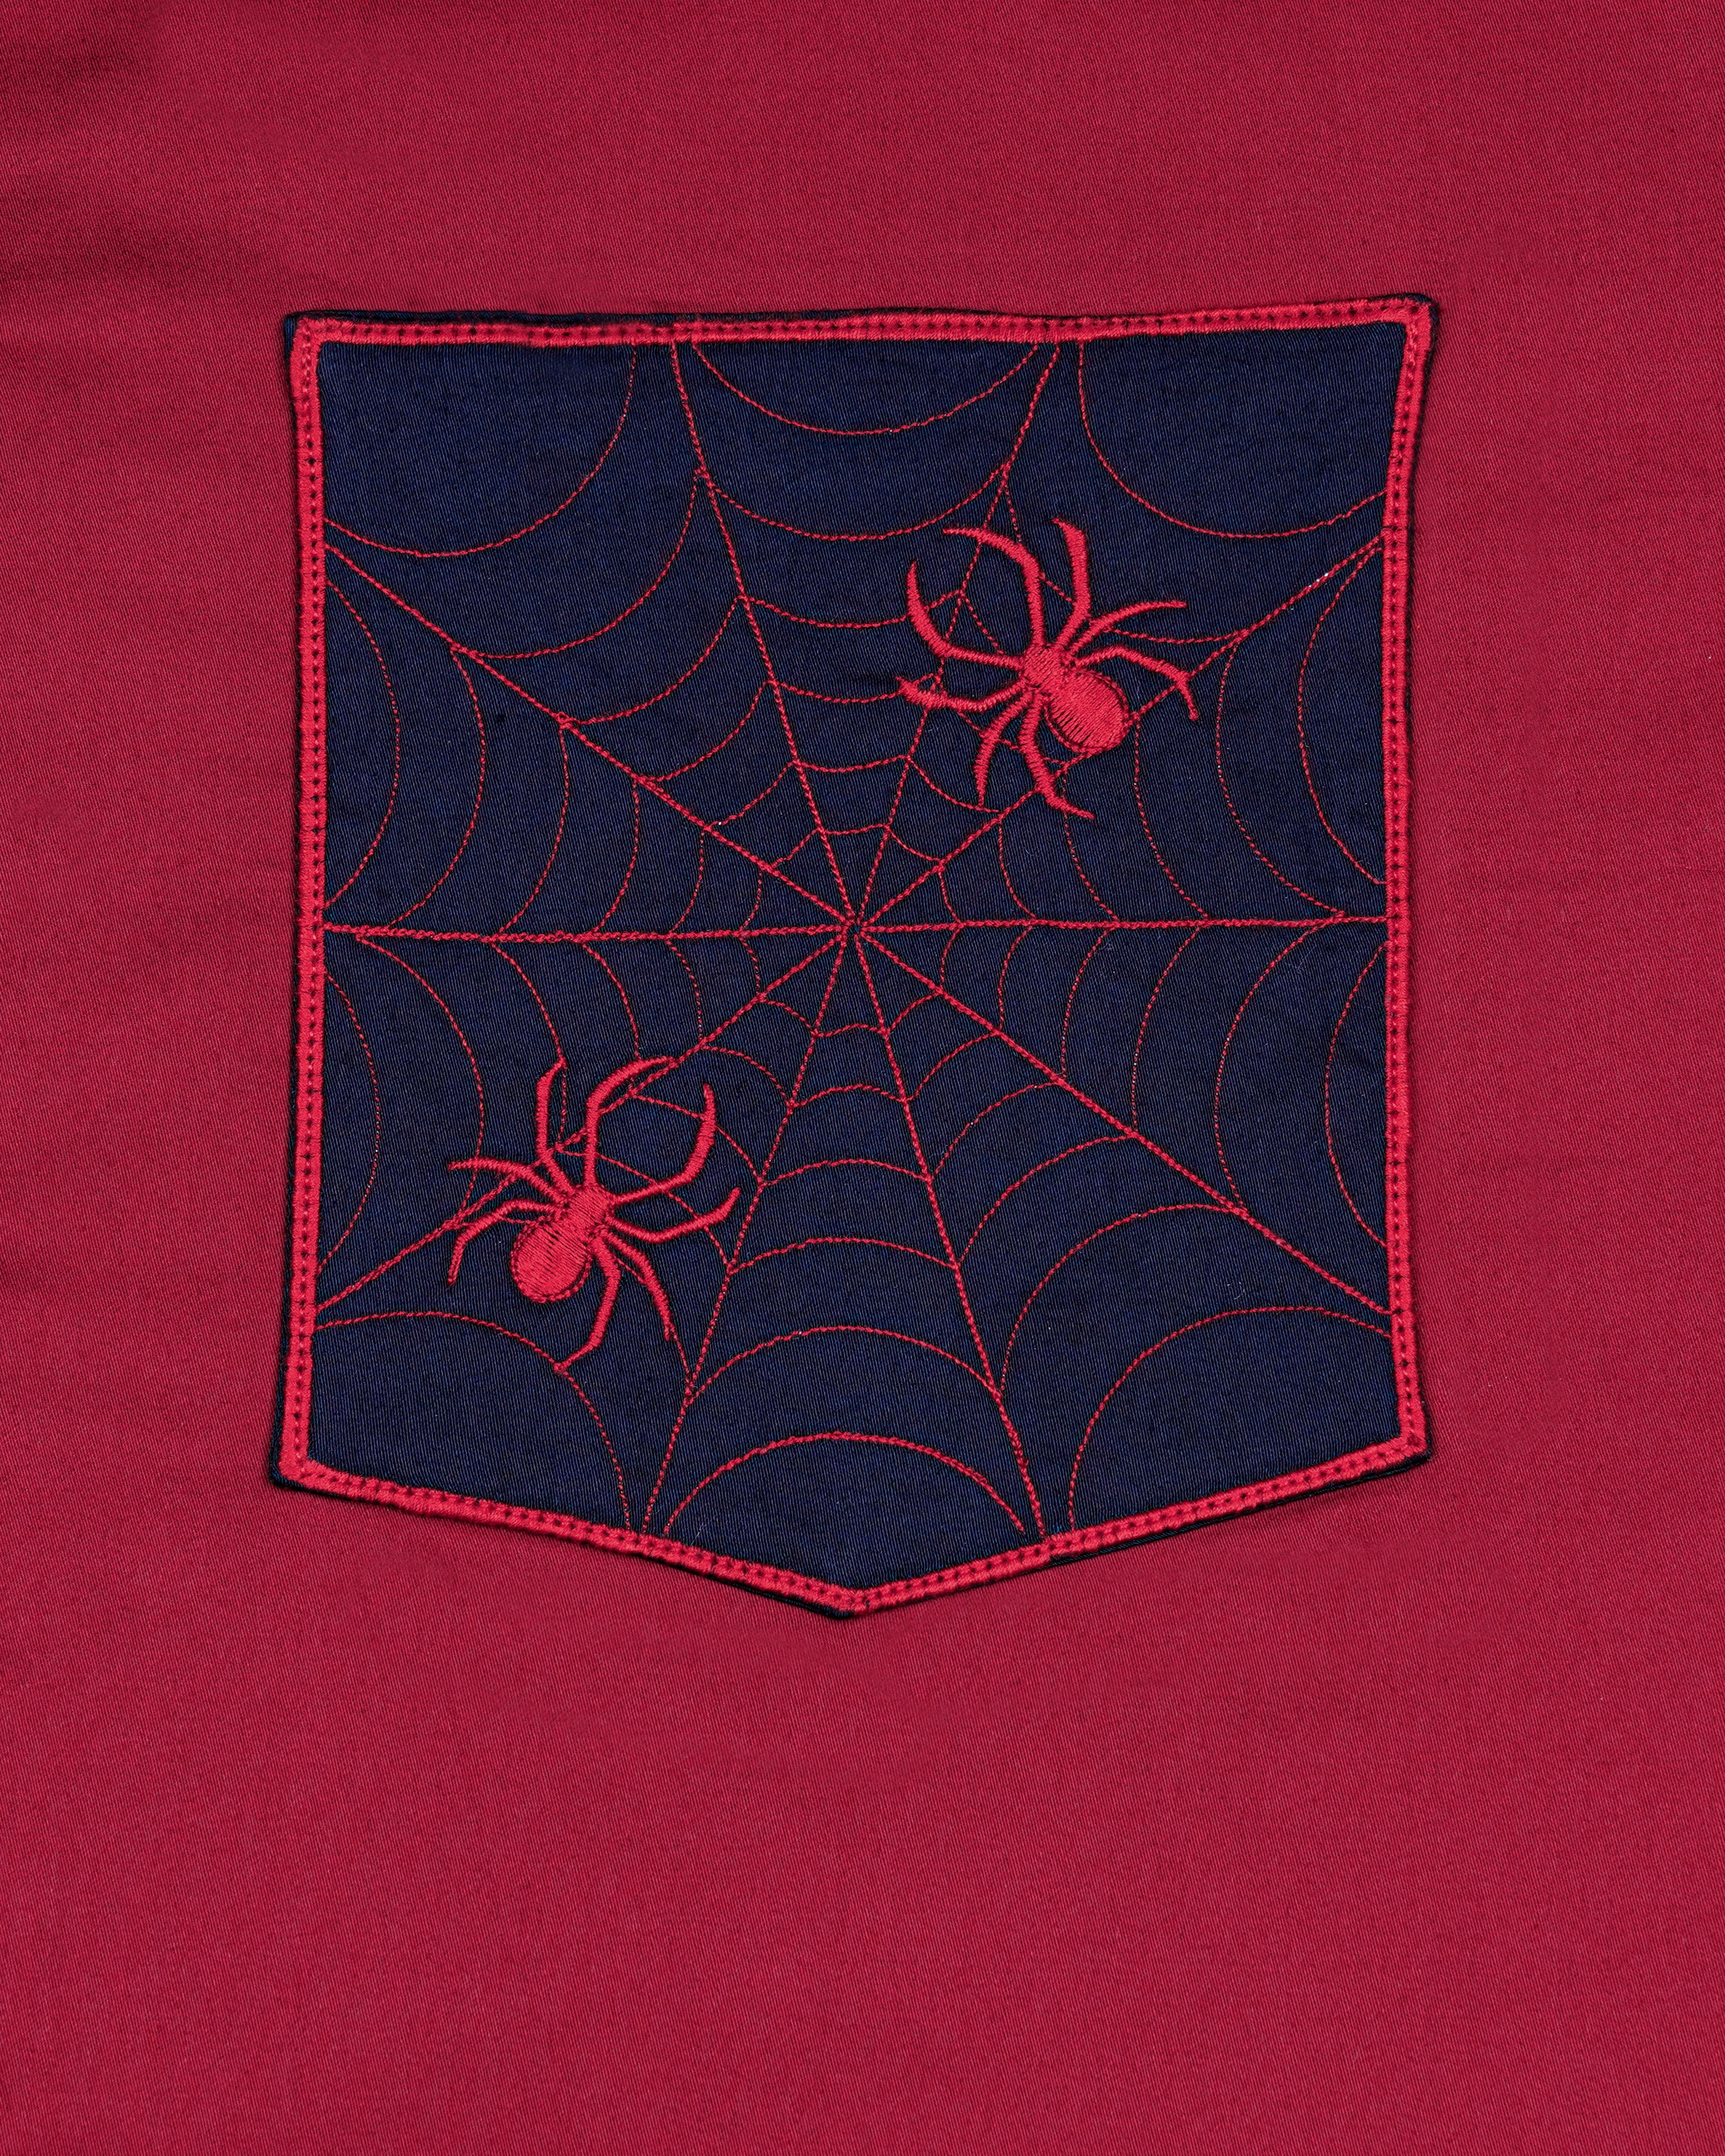 Claret Red with Mirage Blue Patch Subtle Sheen Pocket Spider Embroidered  Super Soft Premium Cotton Shirt 8440-E007-38, 8440-E007-H-38, 8440-E007-39, 8440-E007-H-39, 8440-E007-40, 8440-E007-H-40, 8440-E007-42, 8440-E007-H-42, 8440-E007-44, 8440-E007-H-44, 8440-E007-46, 8440-E007-H-46, 8440-E007-48, 8440-E007-H-48, 8440-E007-50, 8440-E007-H-50, 8440-E007-52, 8440-E007-H-52